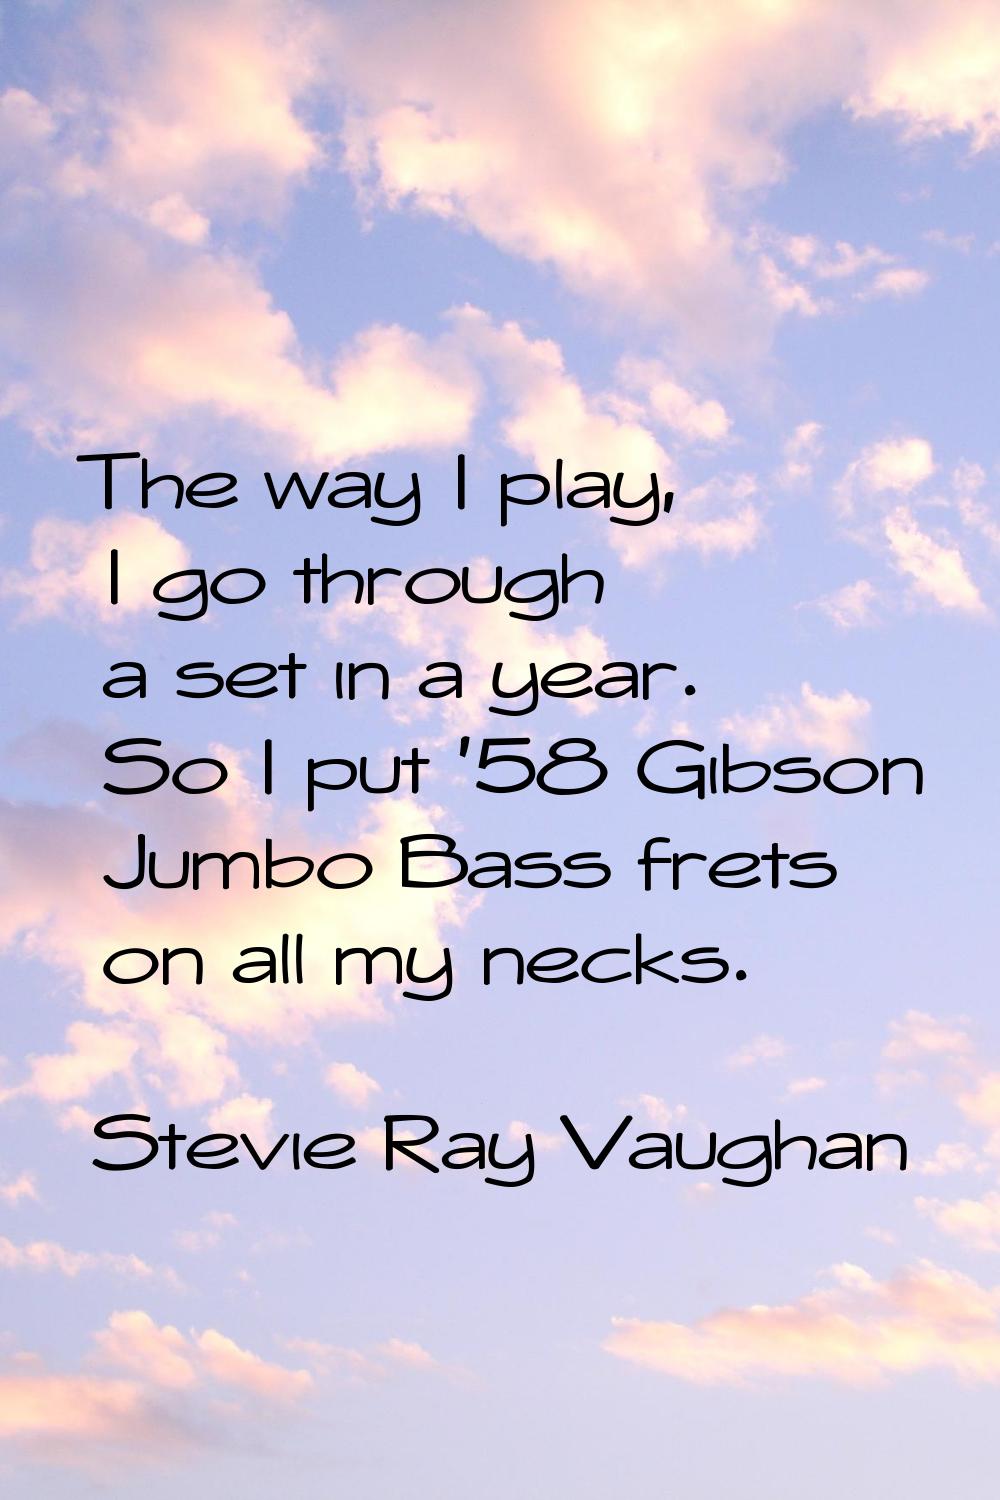 The way I play, I go through a set in a year. So I put '58 Gibson Jumbo Bass frets on all my necks.